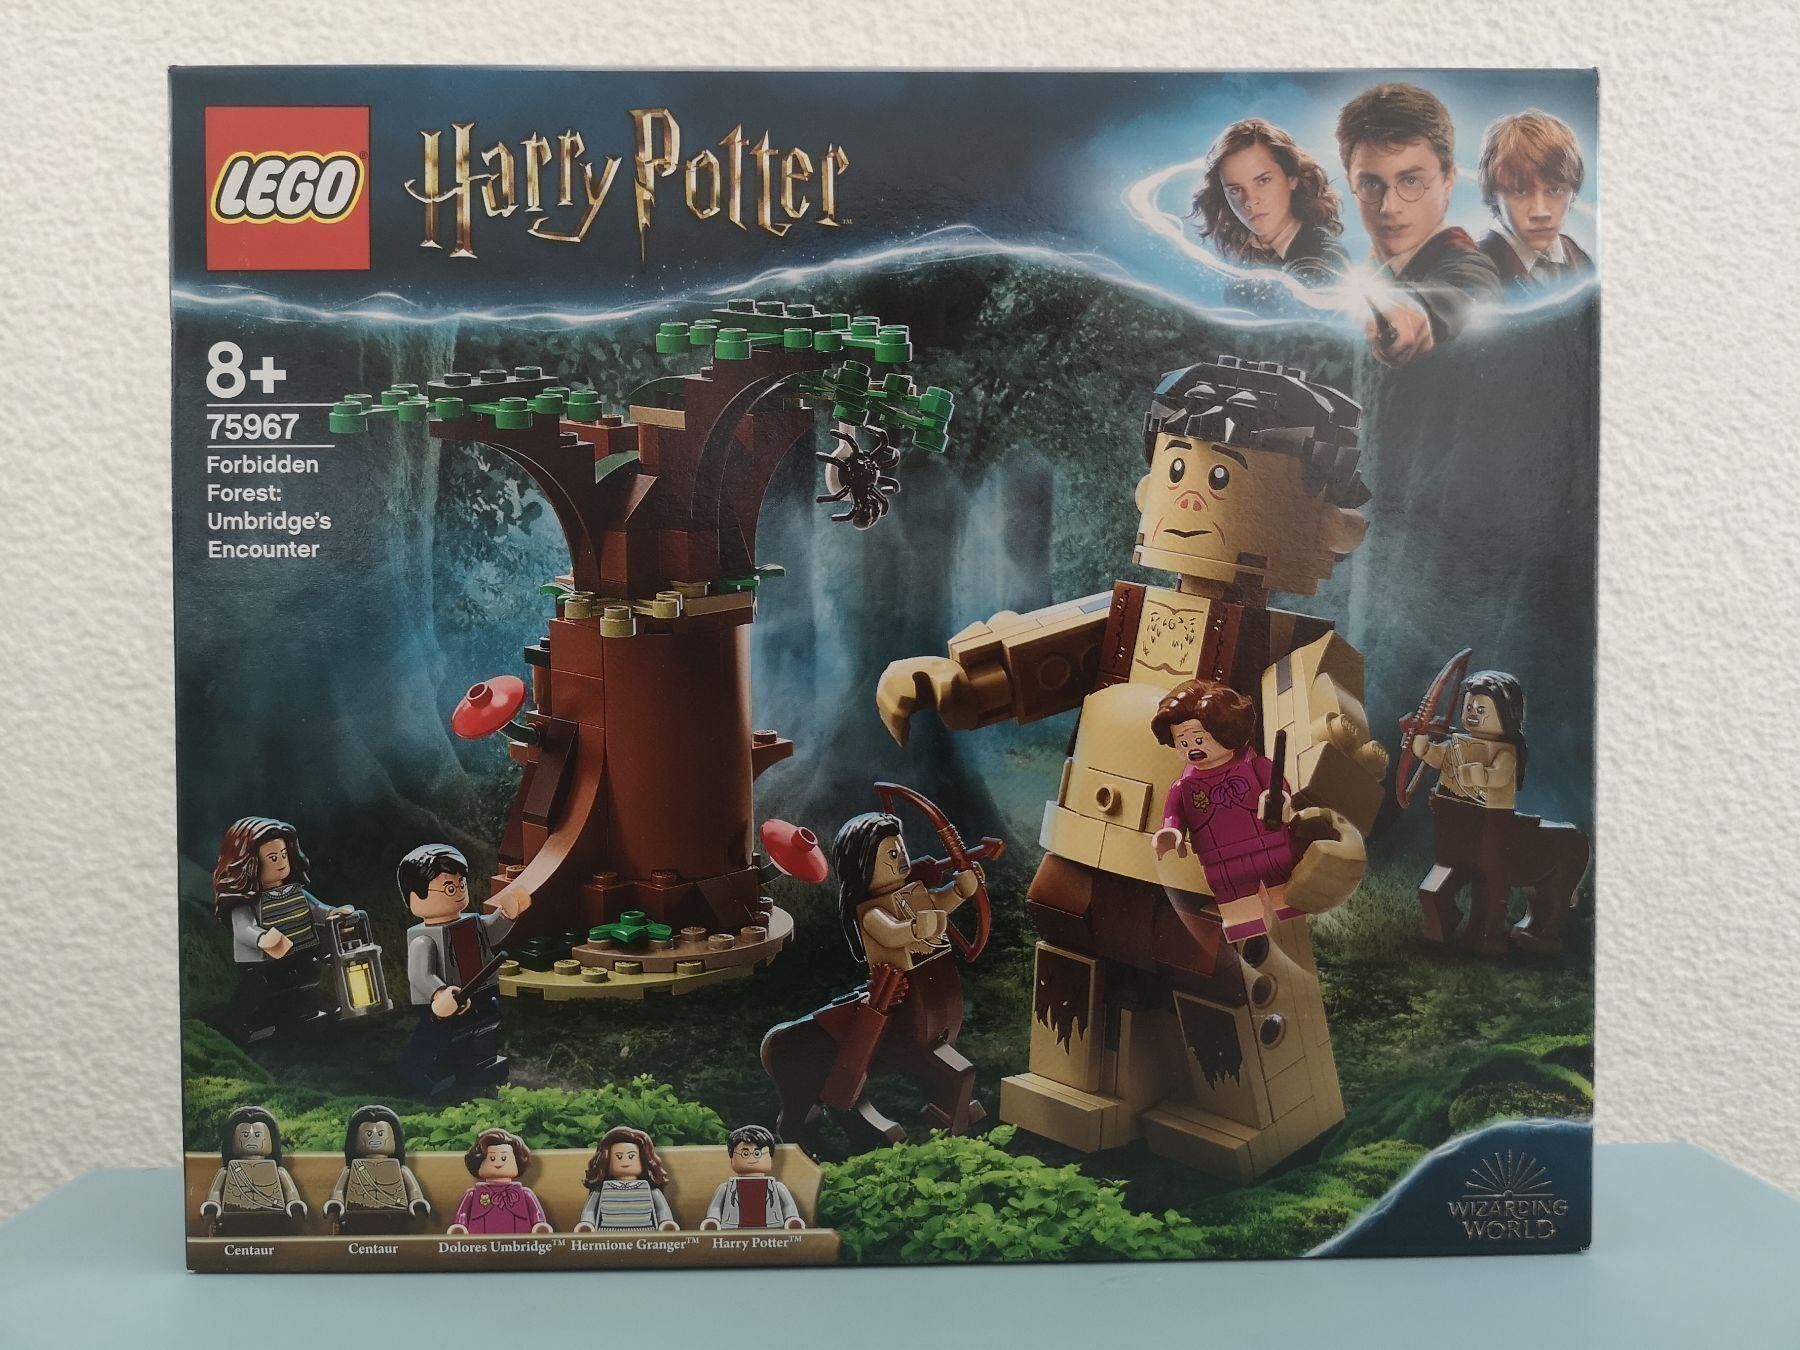 Lego Harry Potter Wii Forbidden Forest Walkthrough